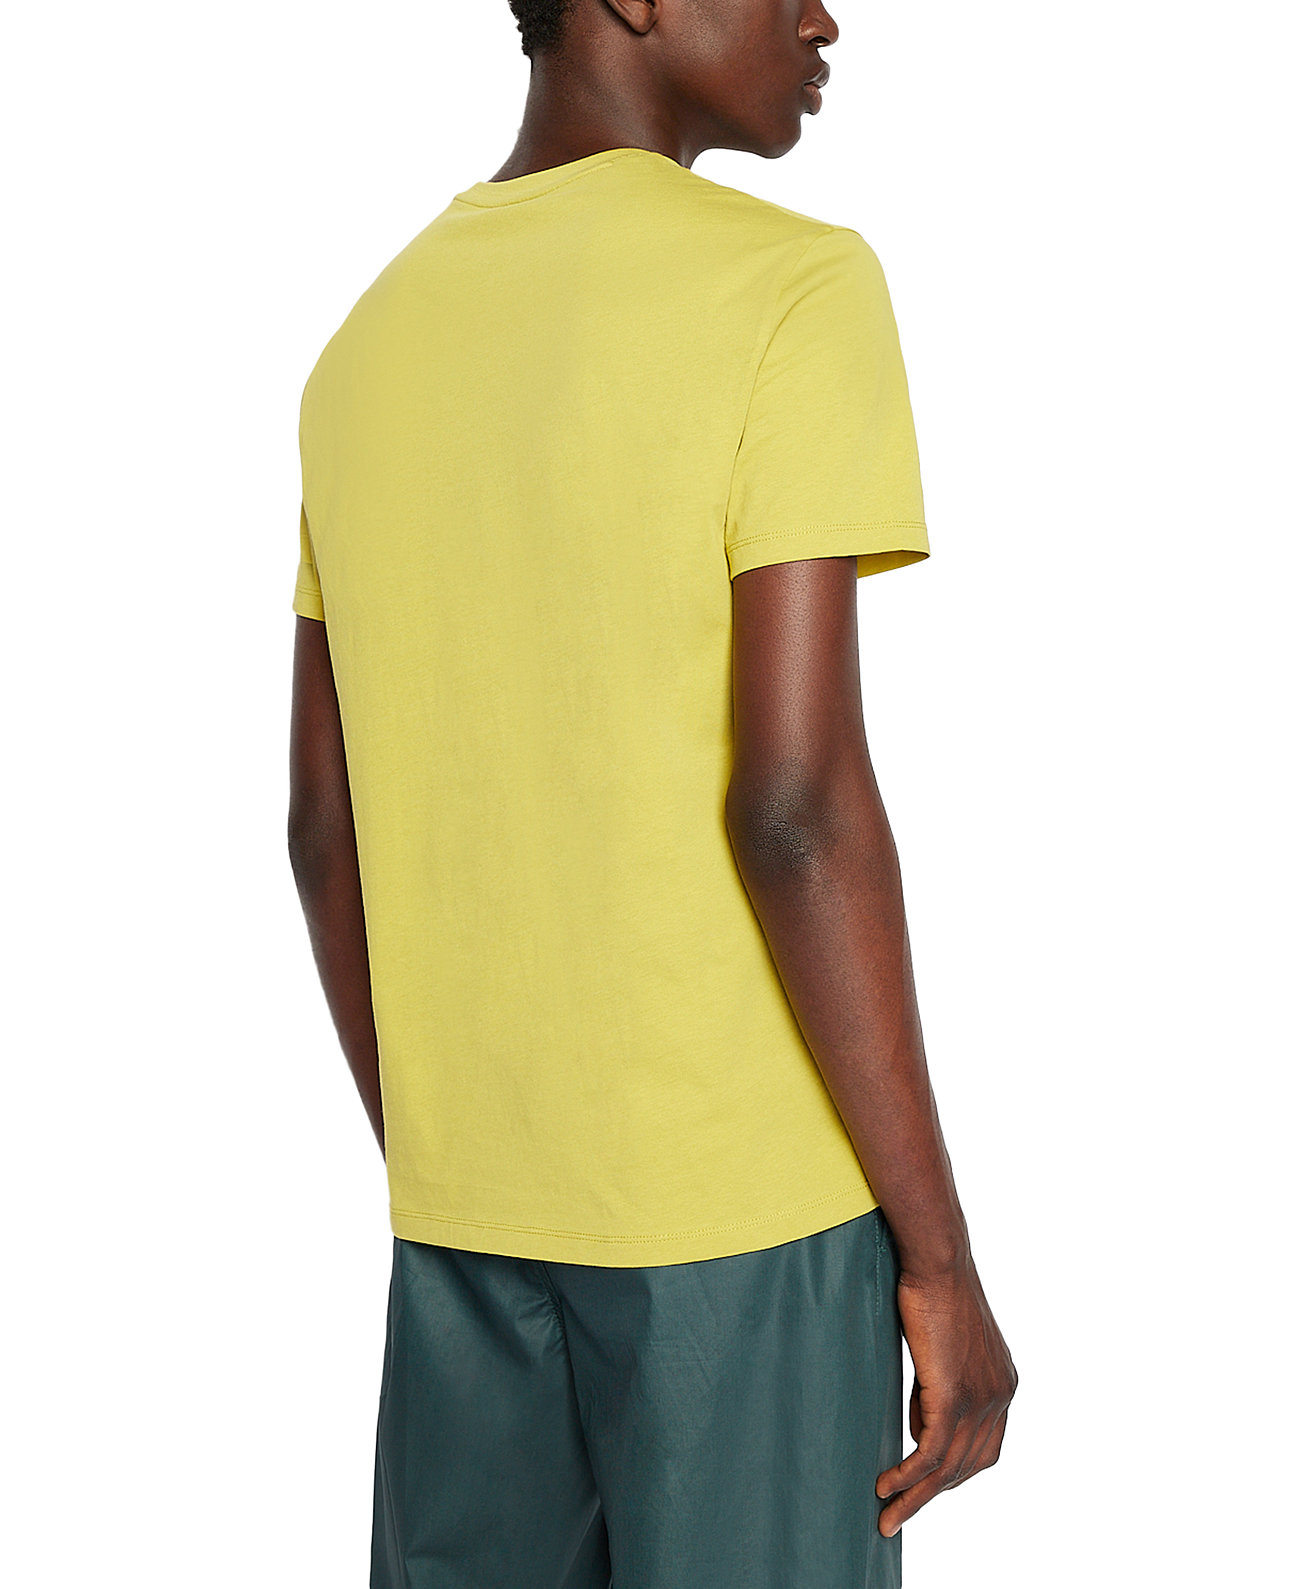 Мужская футболка с 3D-трафаретным логотипом Armani